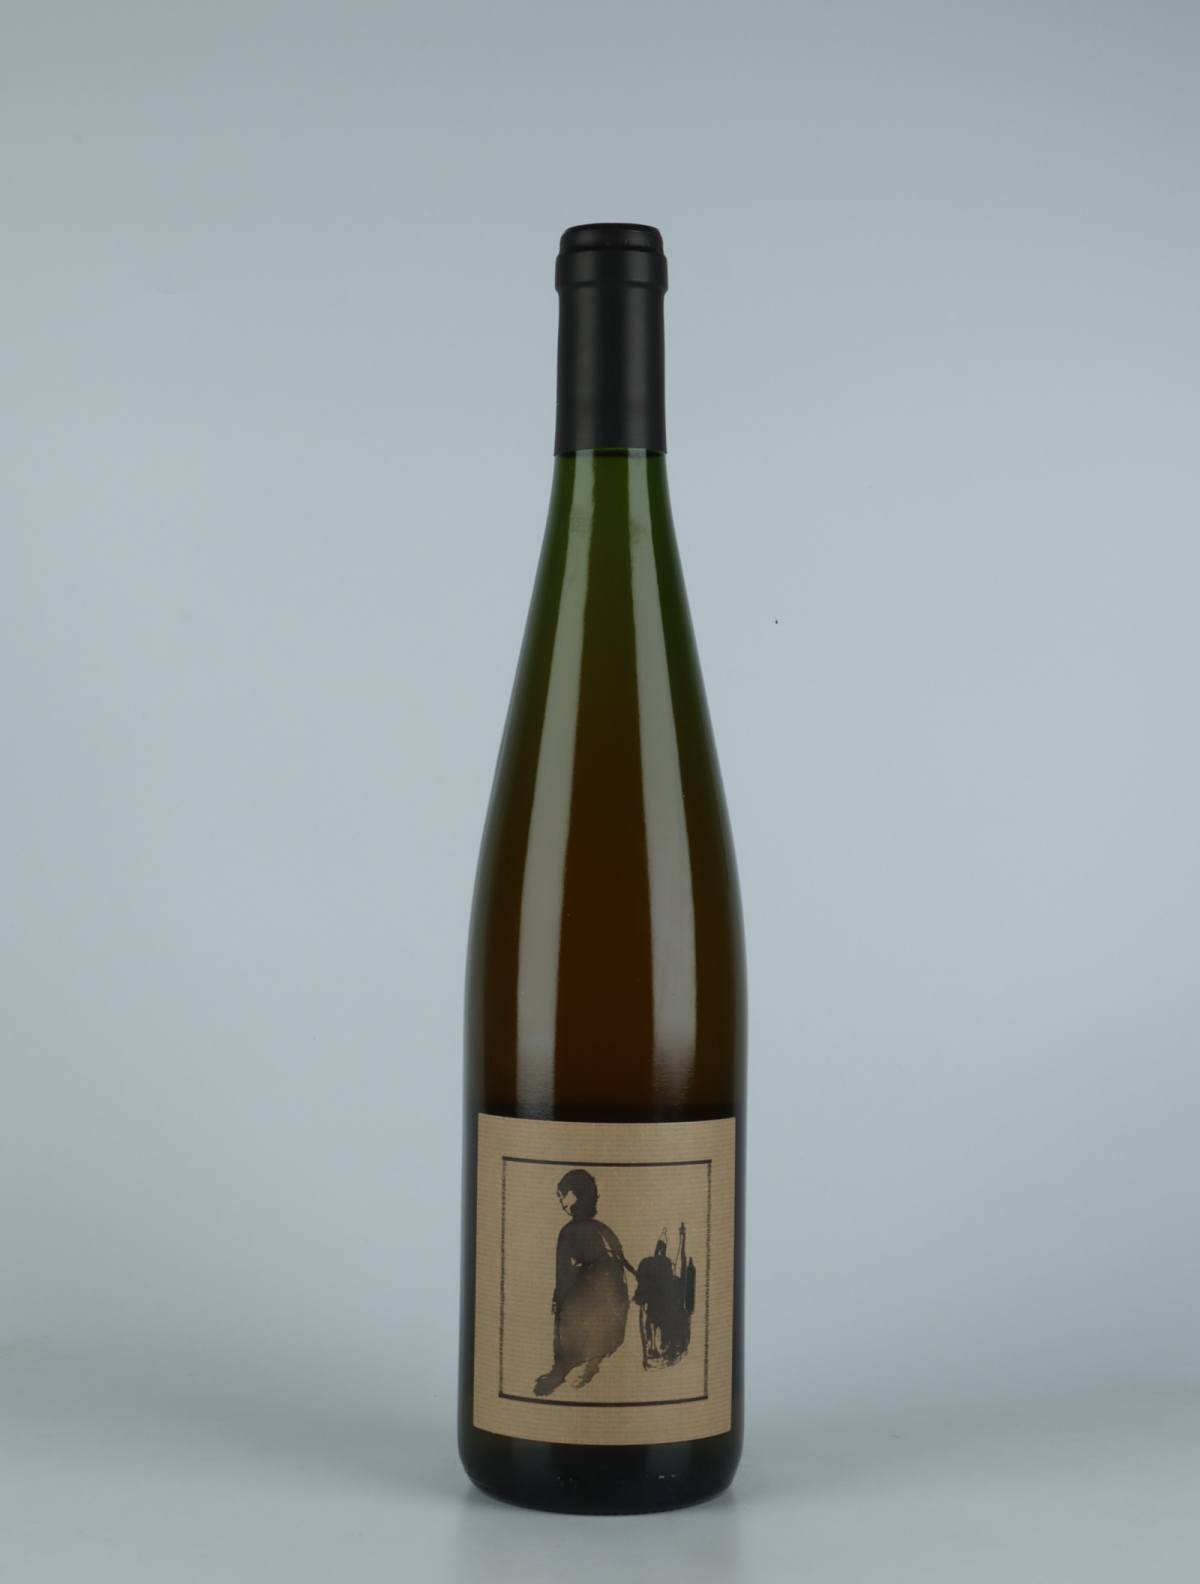 A bottle 2021 Demoiselle Orange wine from Domaine Rietsch, Alsace in France